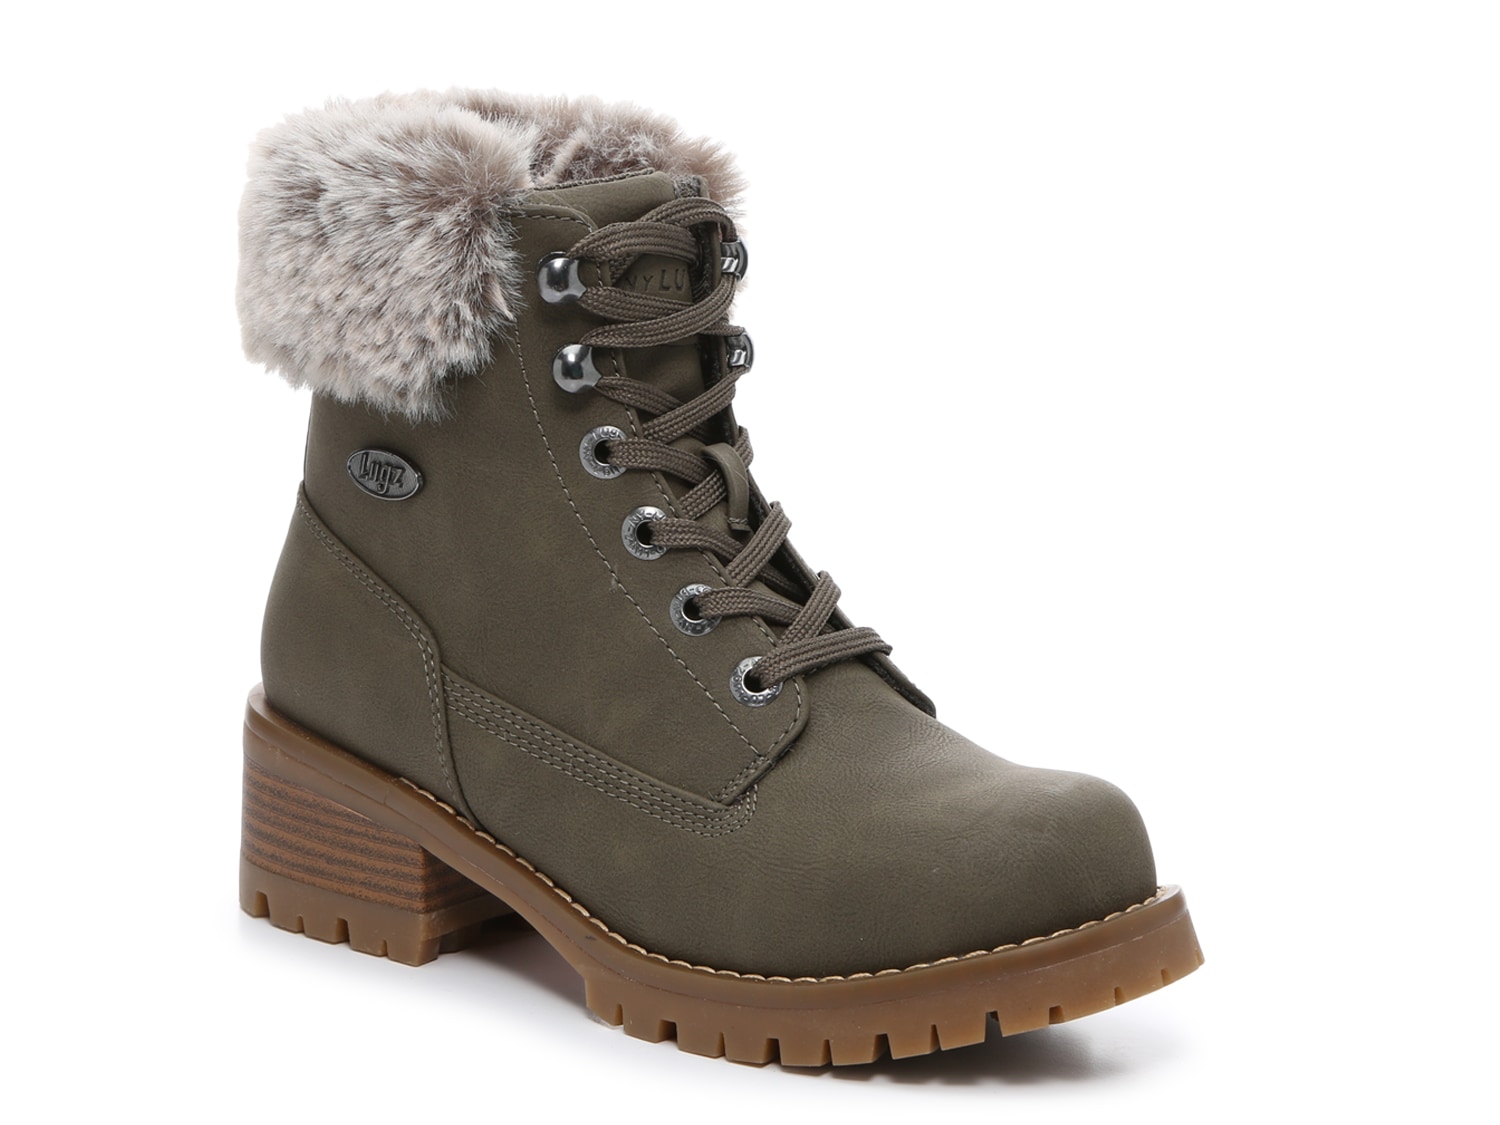 grey lugz boots